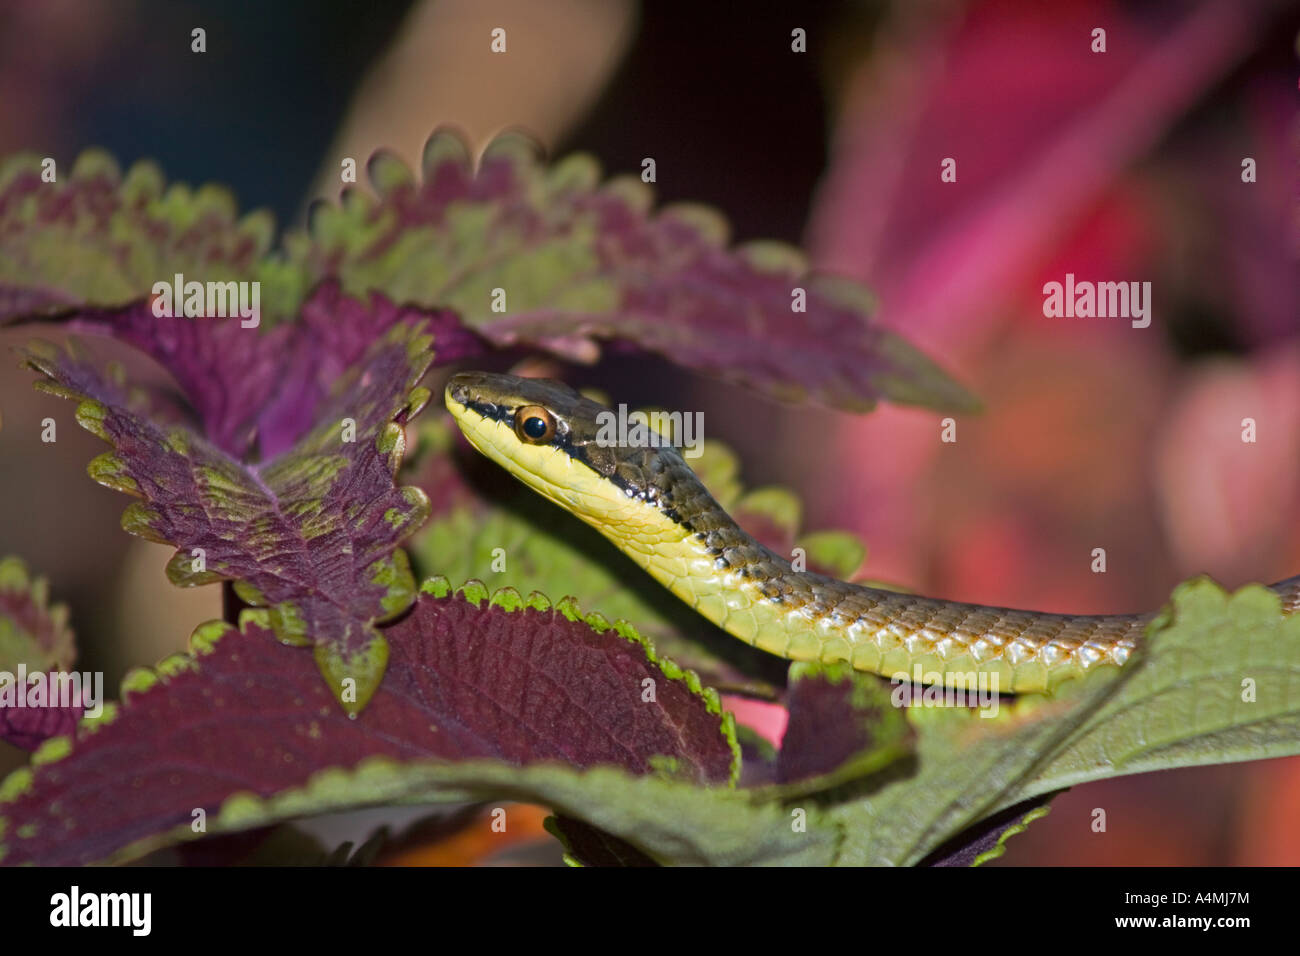 Salomone Tree Snake, Dendrelaphis salomonis. Noto anche come Dendrelaphis calligaster Foto Stock